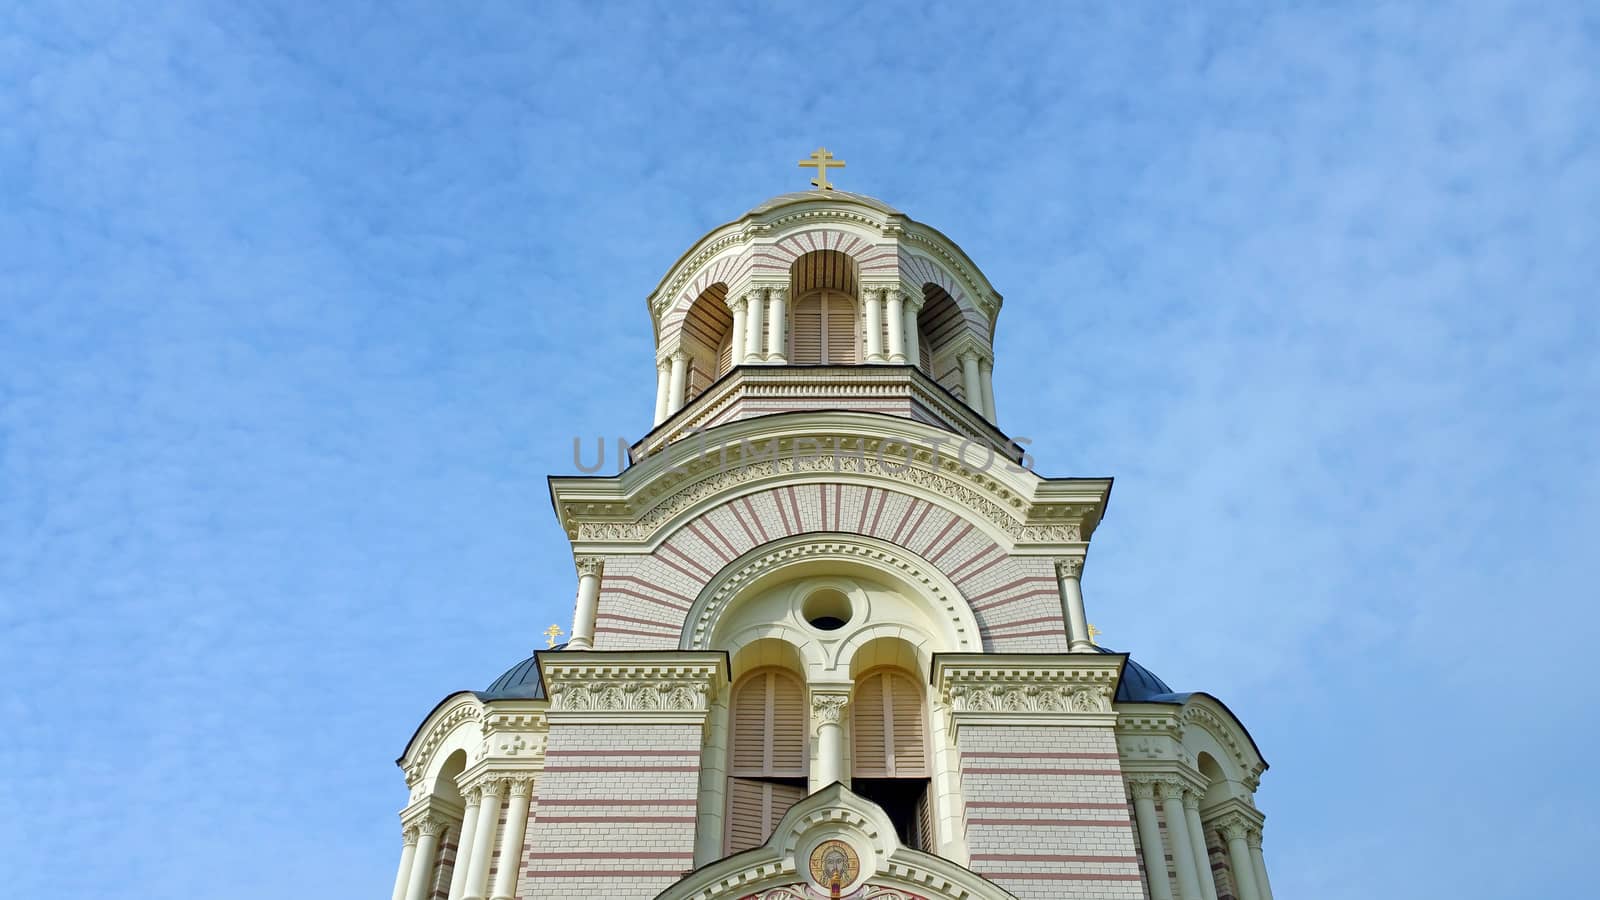 Church tower against on the blue sky